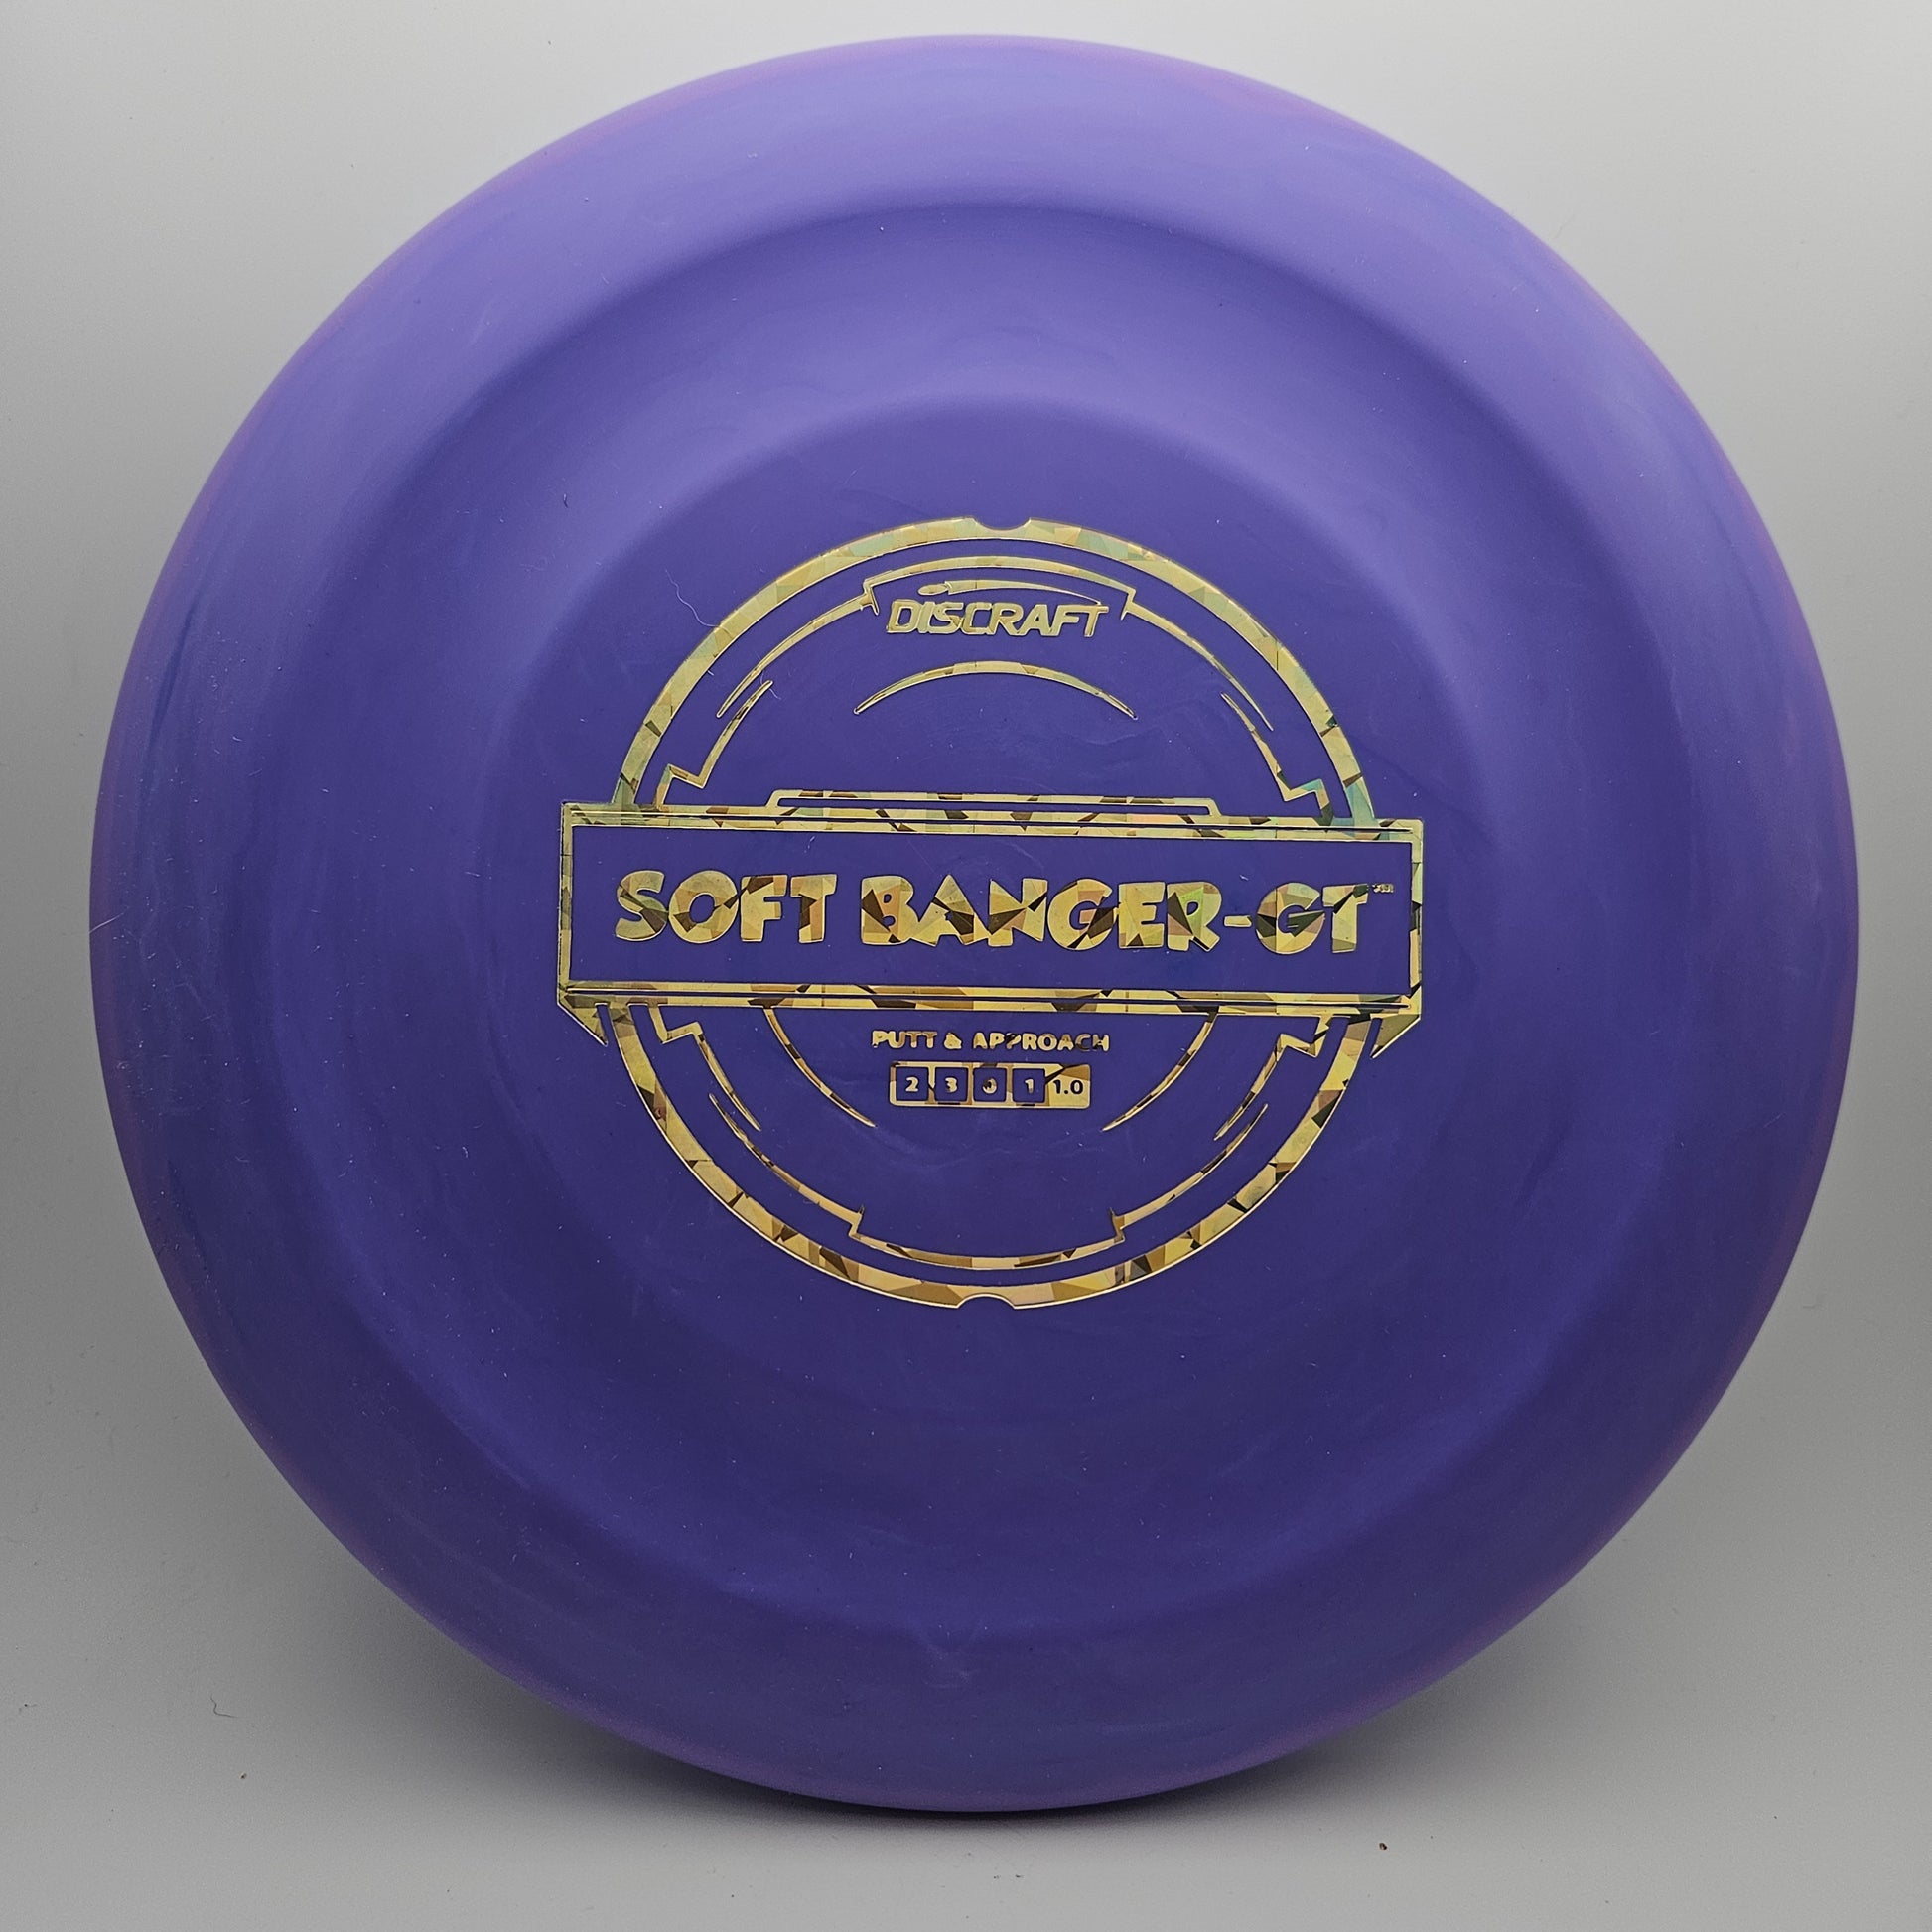 #7212 170-172g Purple Putter Soft Banger GT